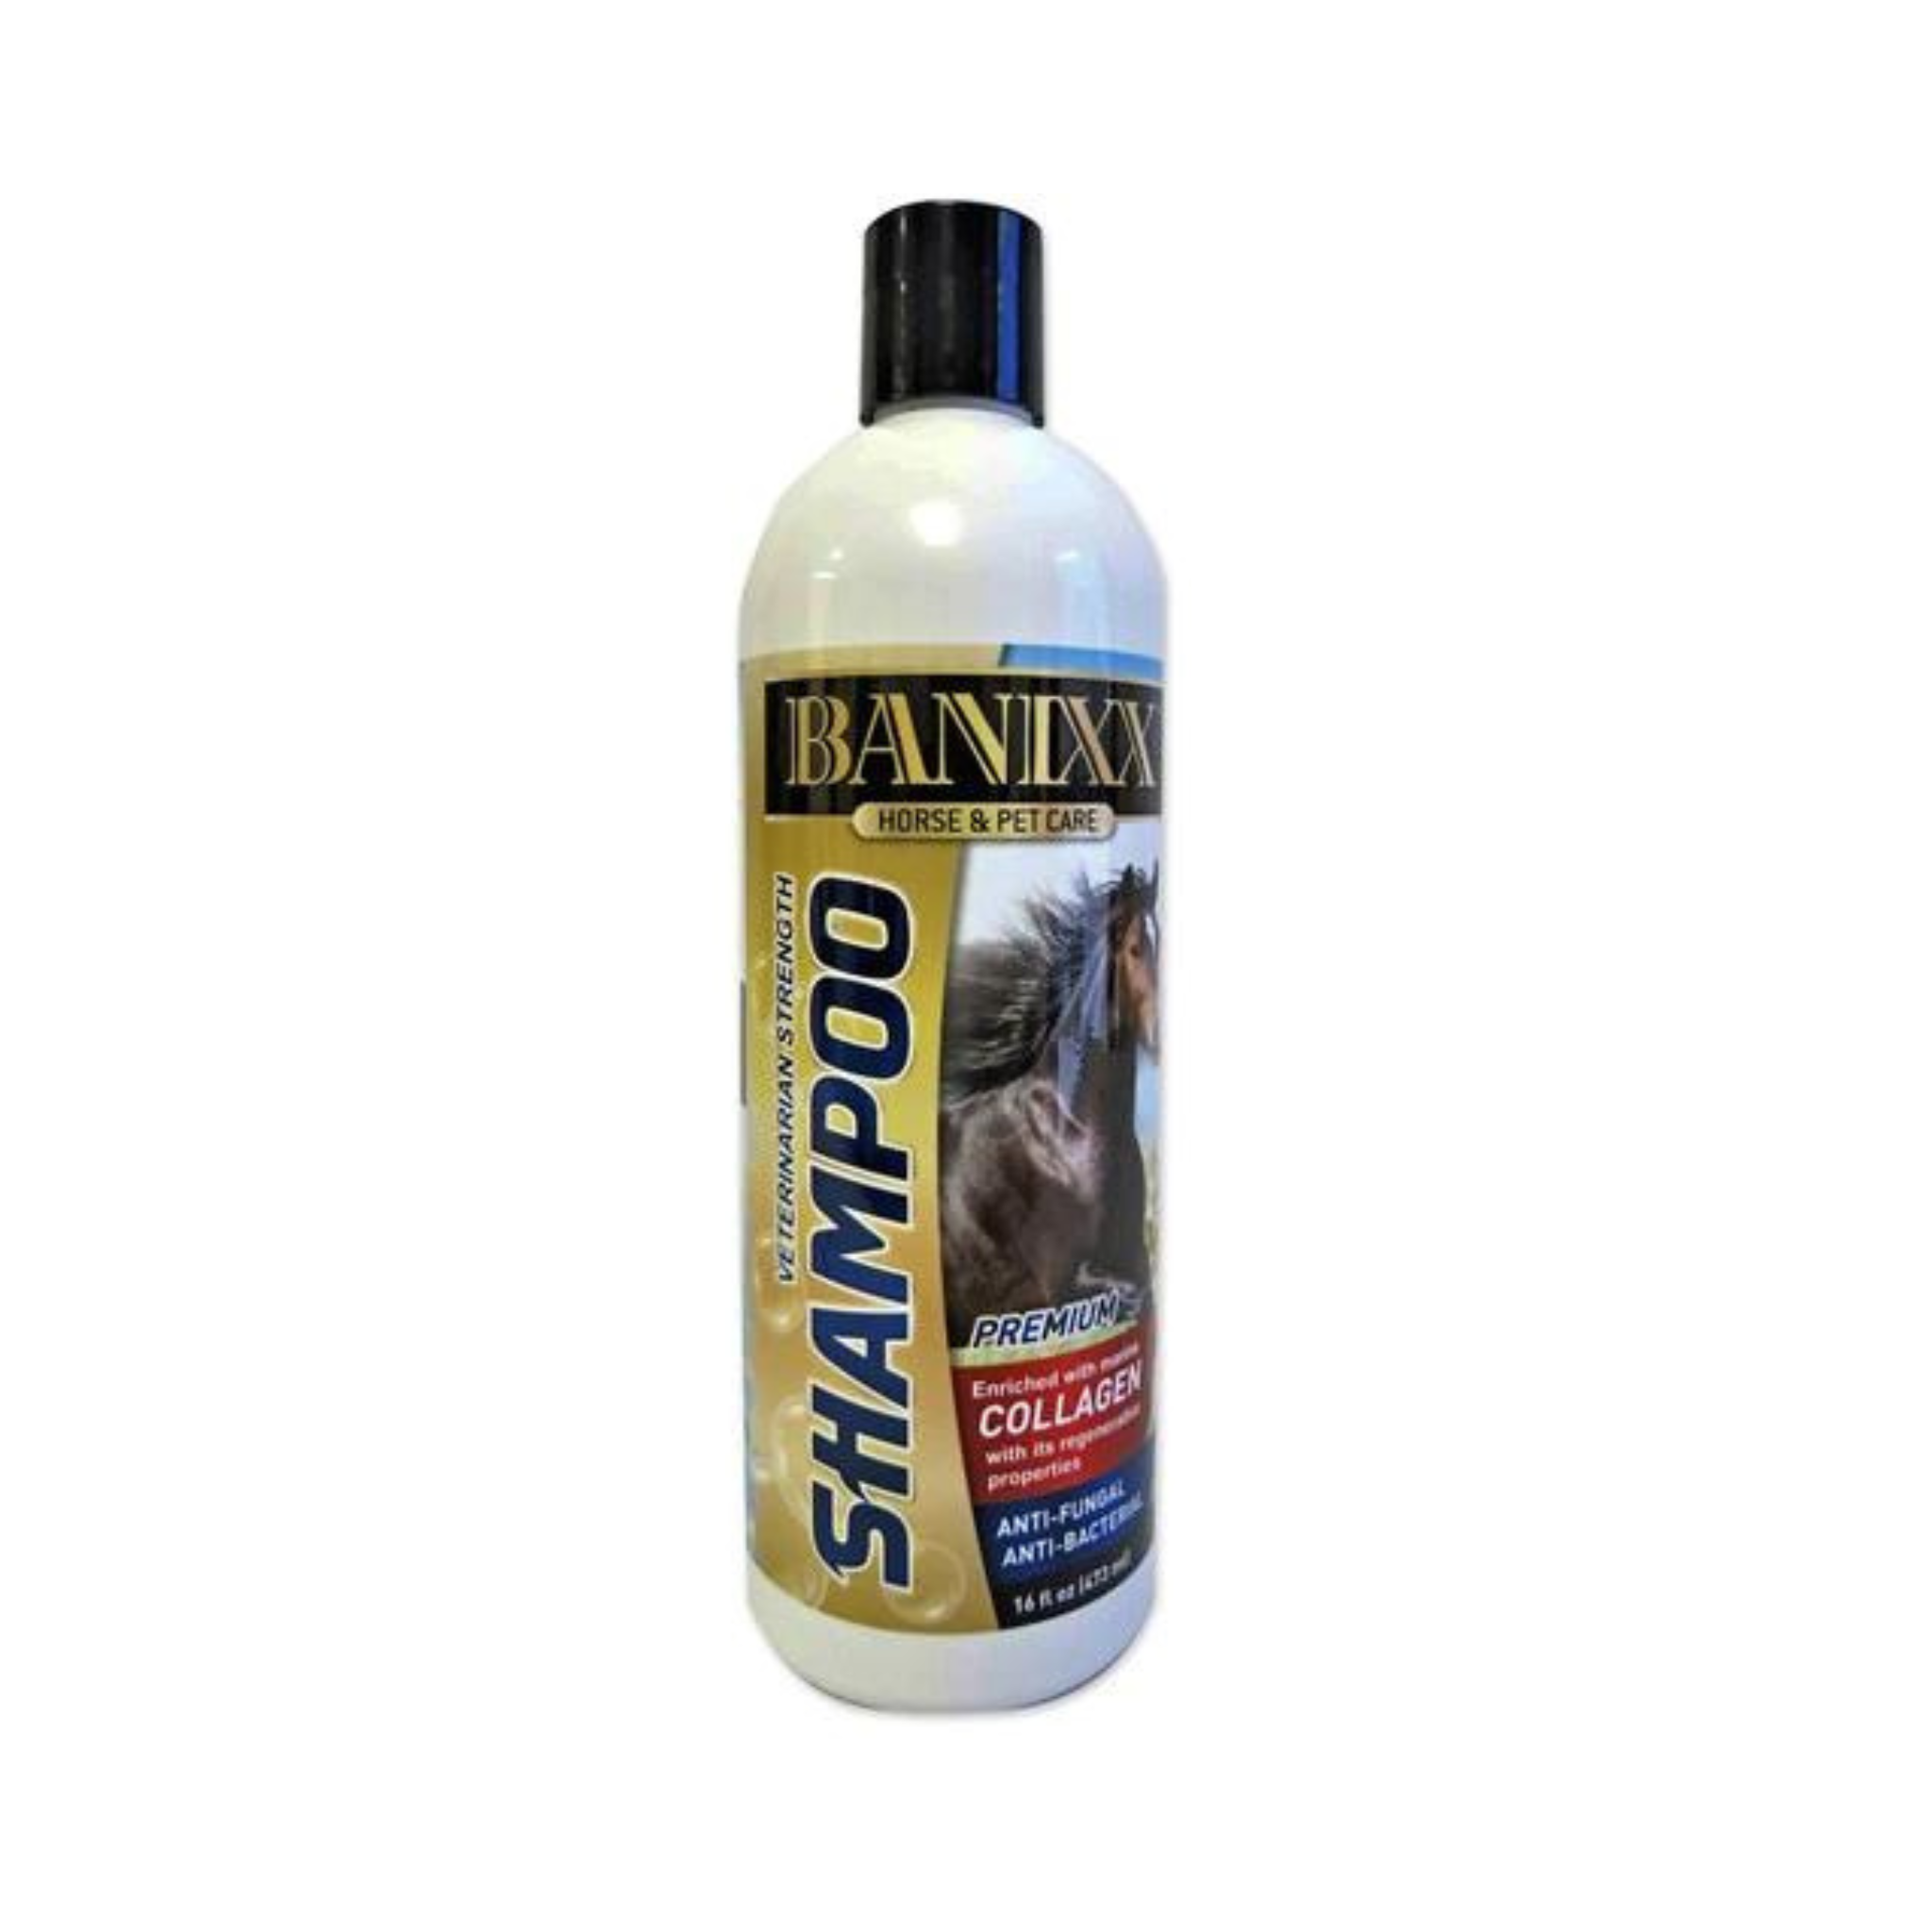 Banixx Medicated Horse Shampoo